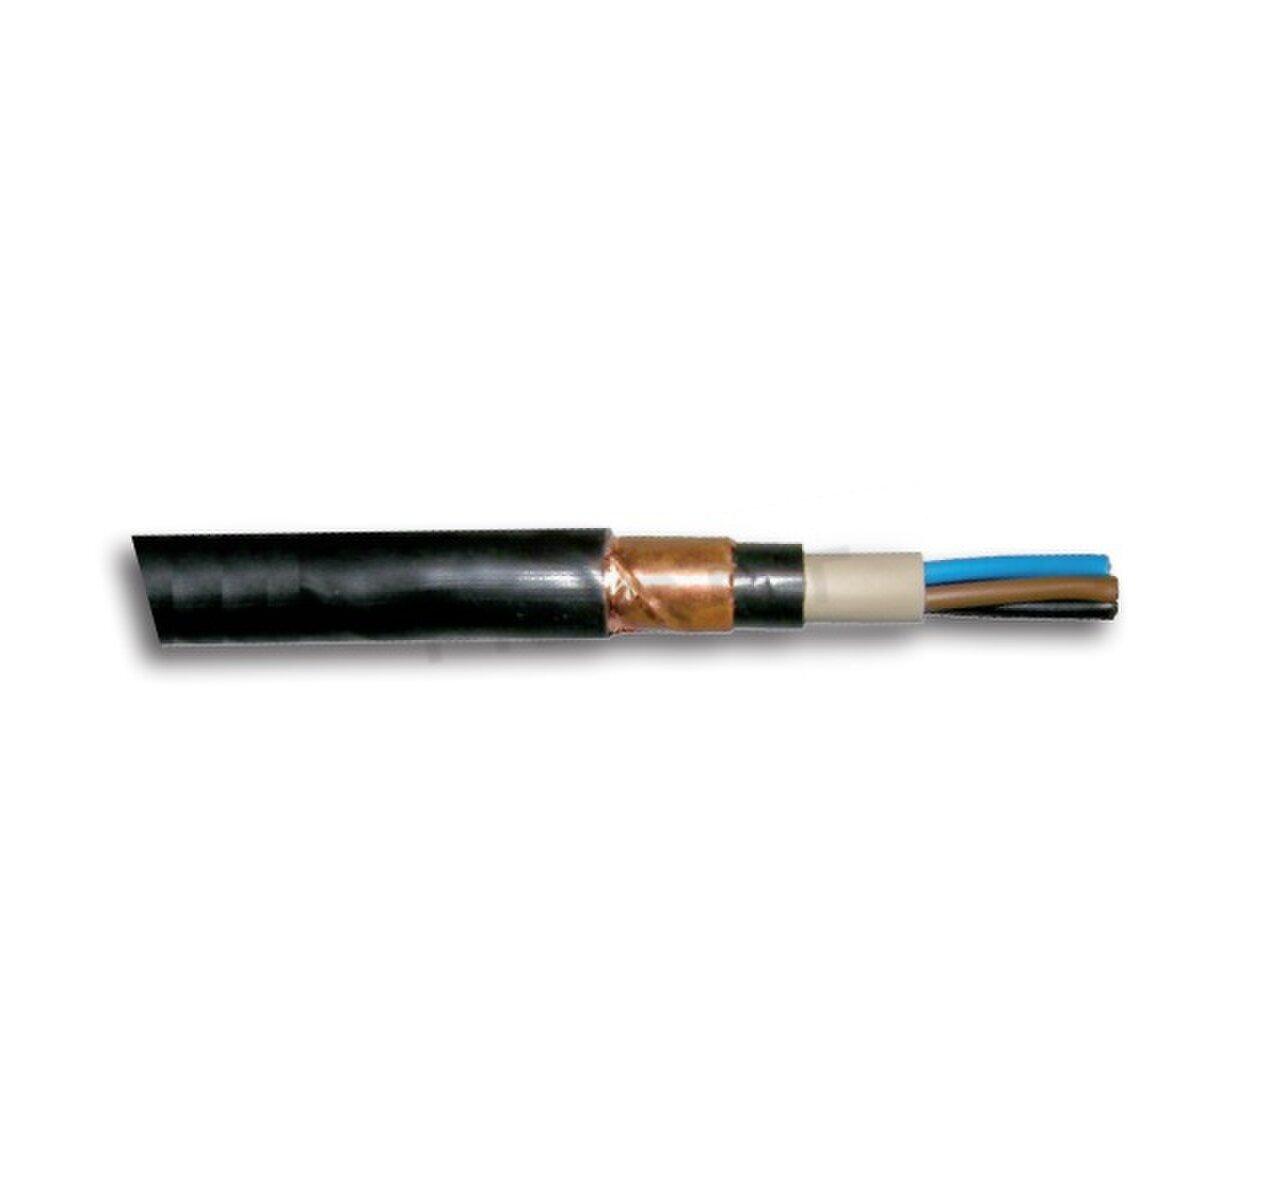 Kábel 1-CYKFY-J 7x2,5 mm2 silový